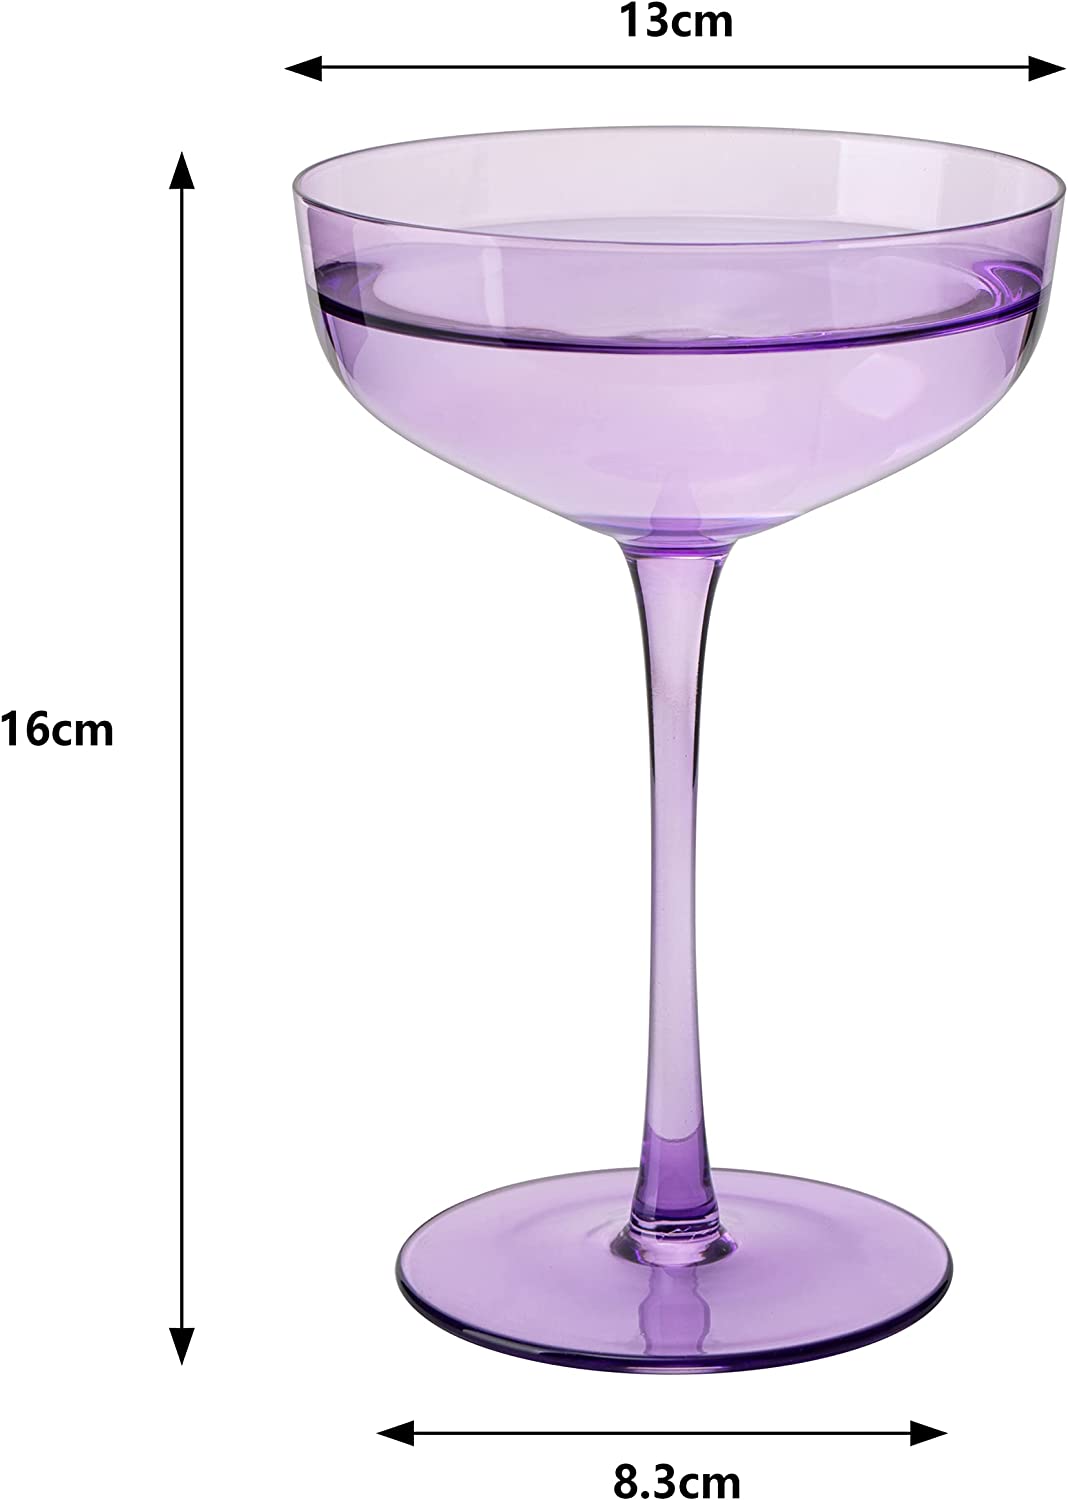 Coupe Glass | Lavender | 7 oz